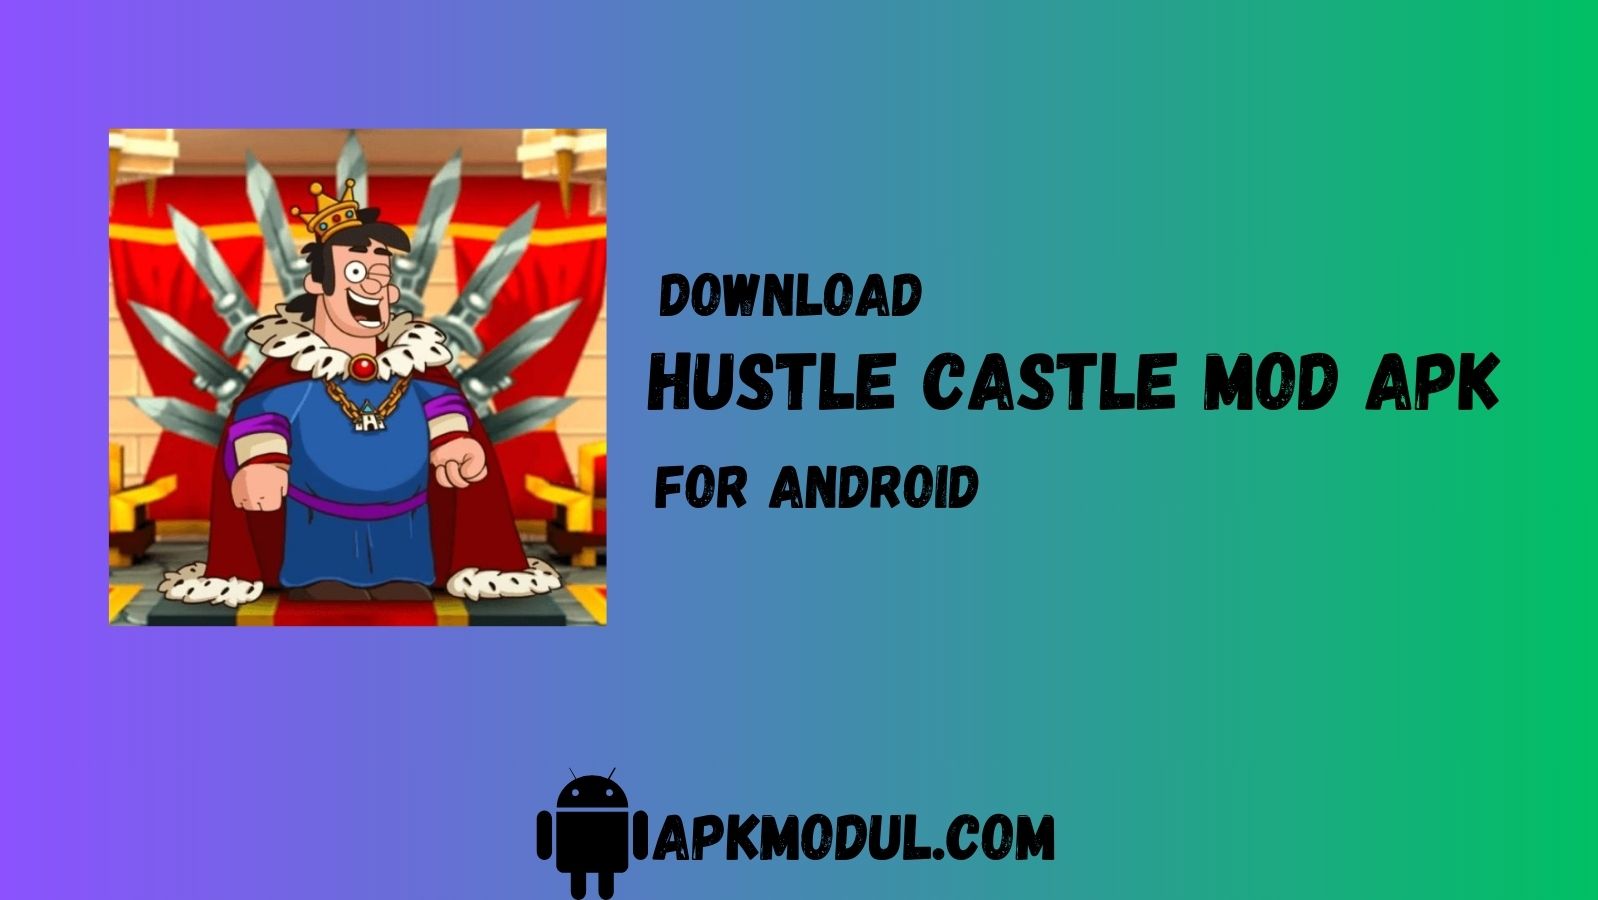 Hustle Castle mod app